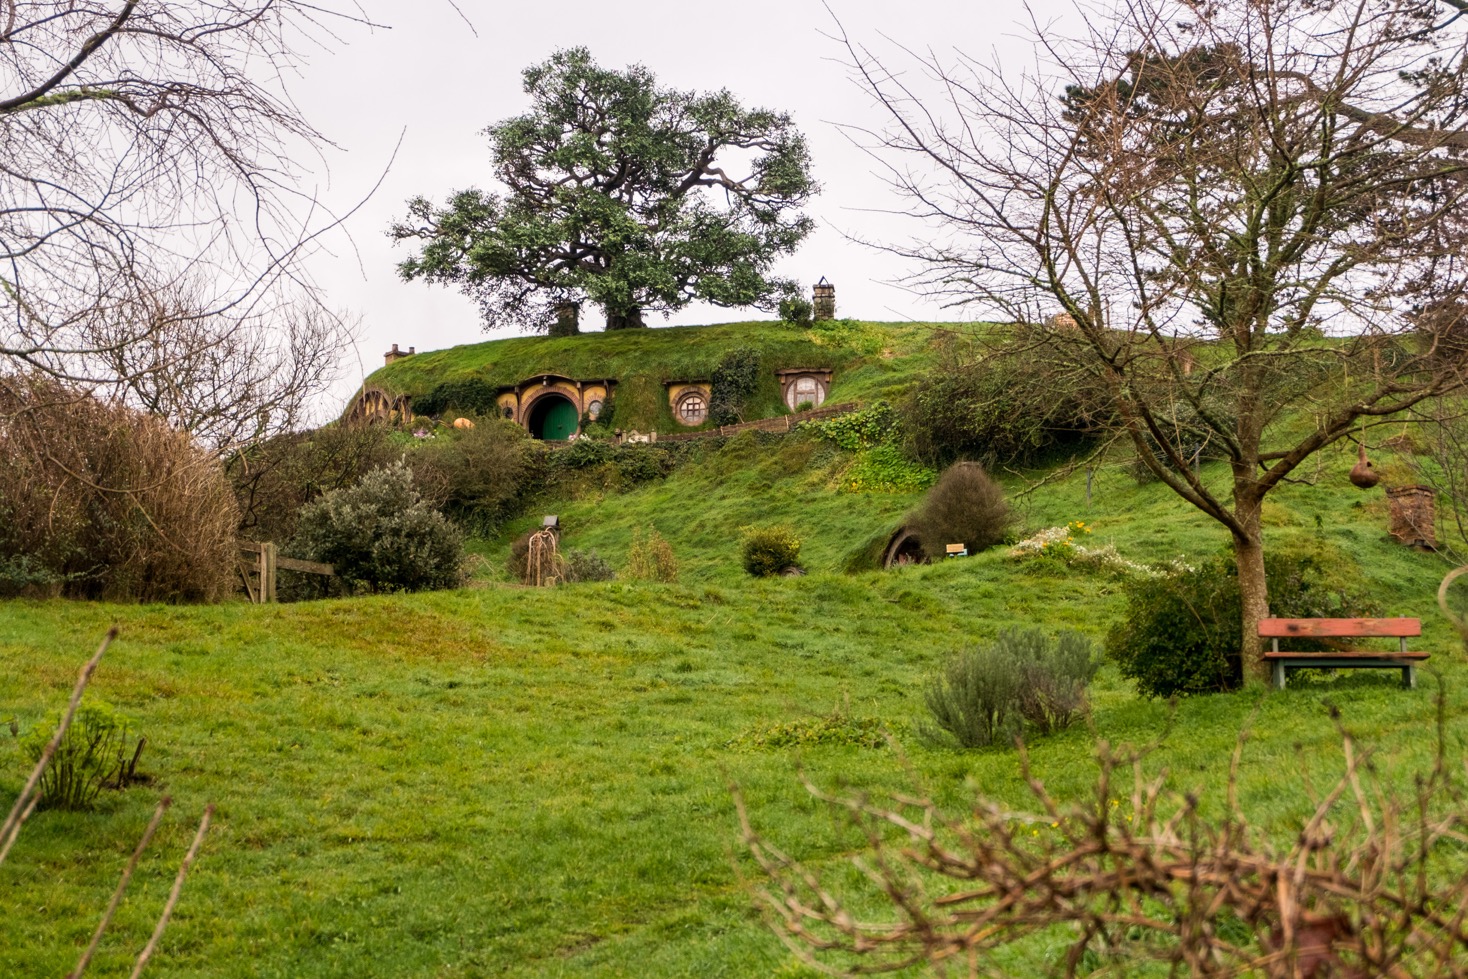 hobbit garden in Hobbiton